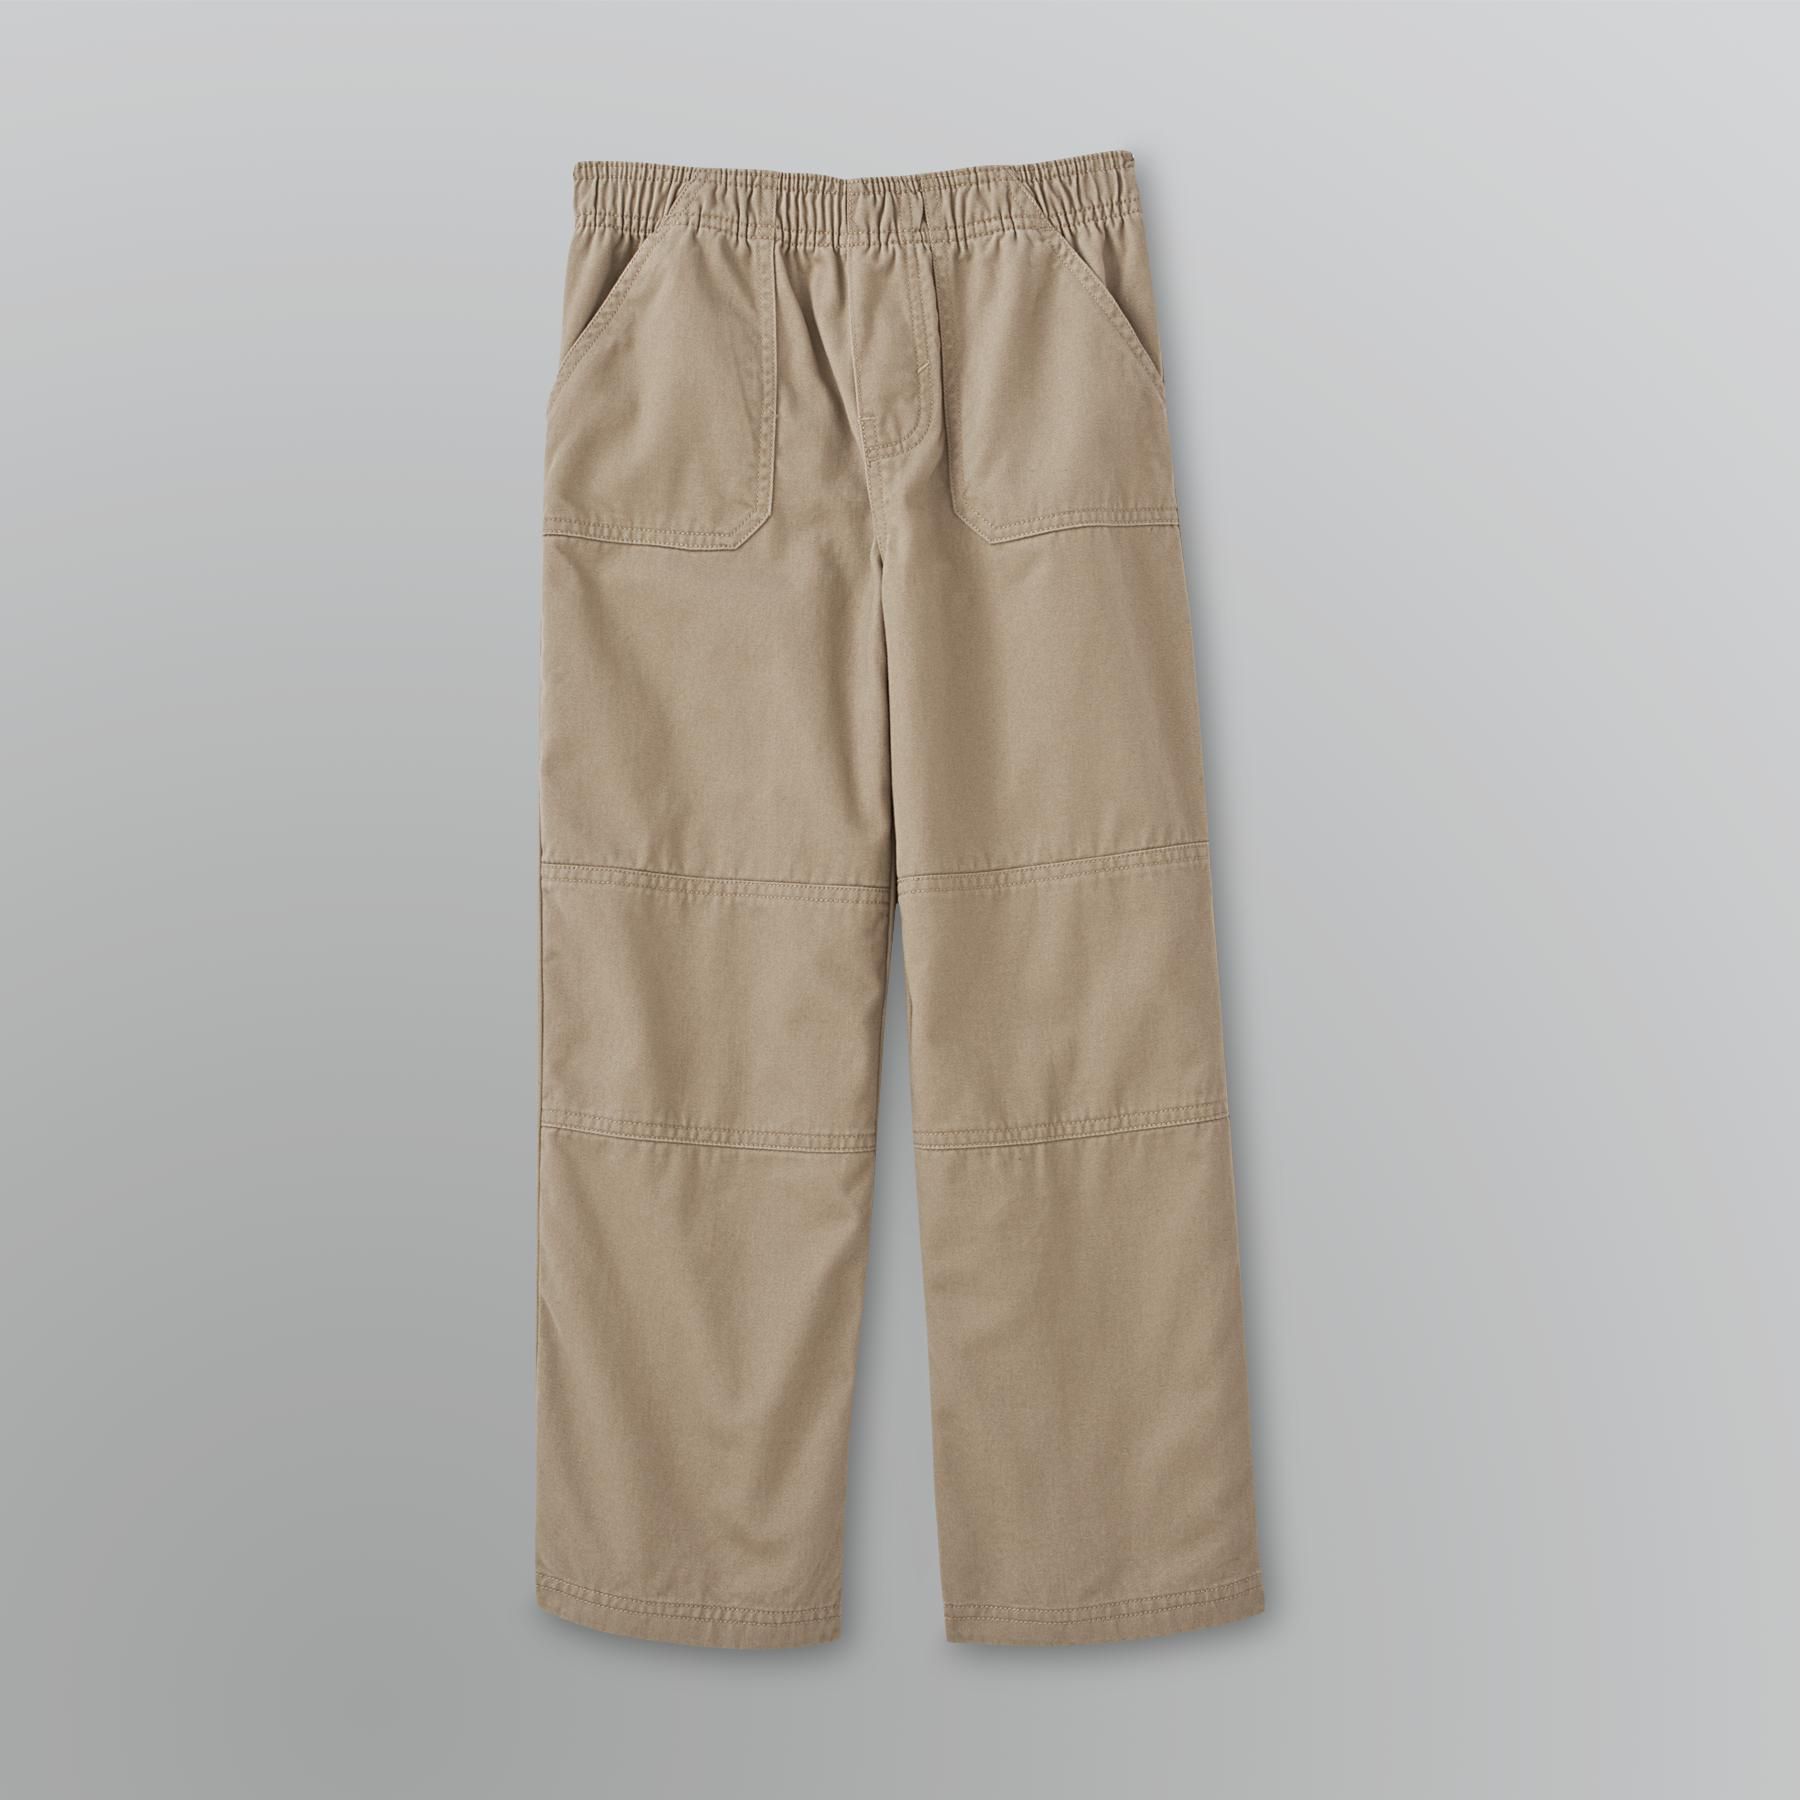 Toughskins Boy's Khaki Elastic Waist Pants